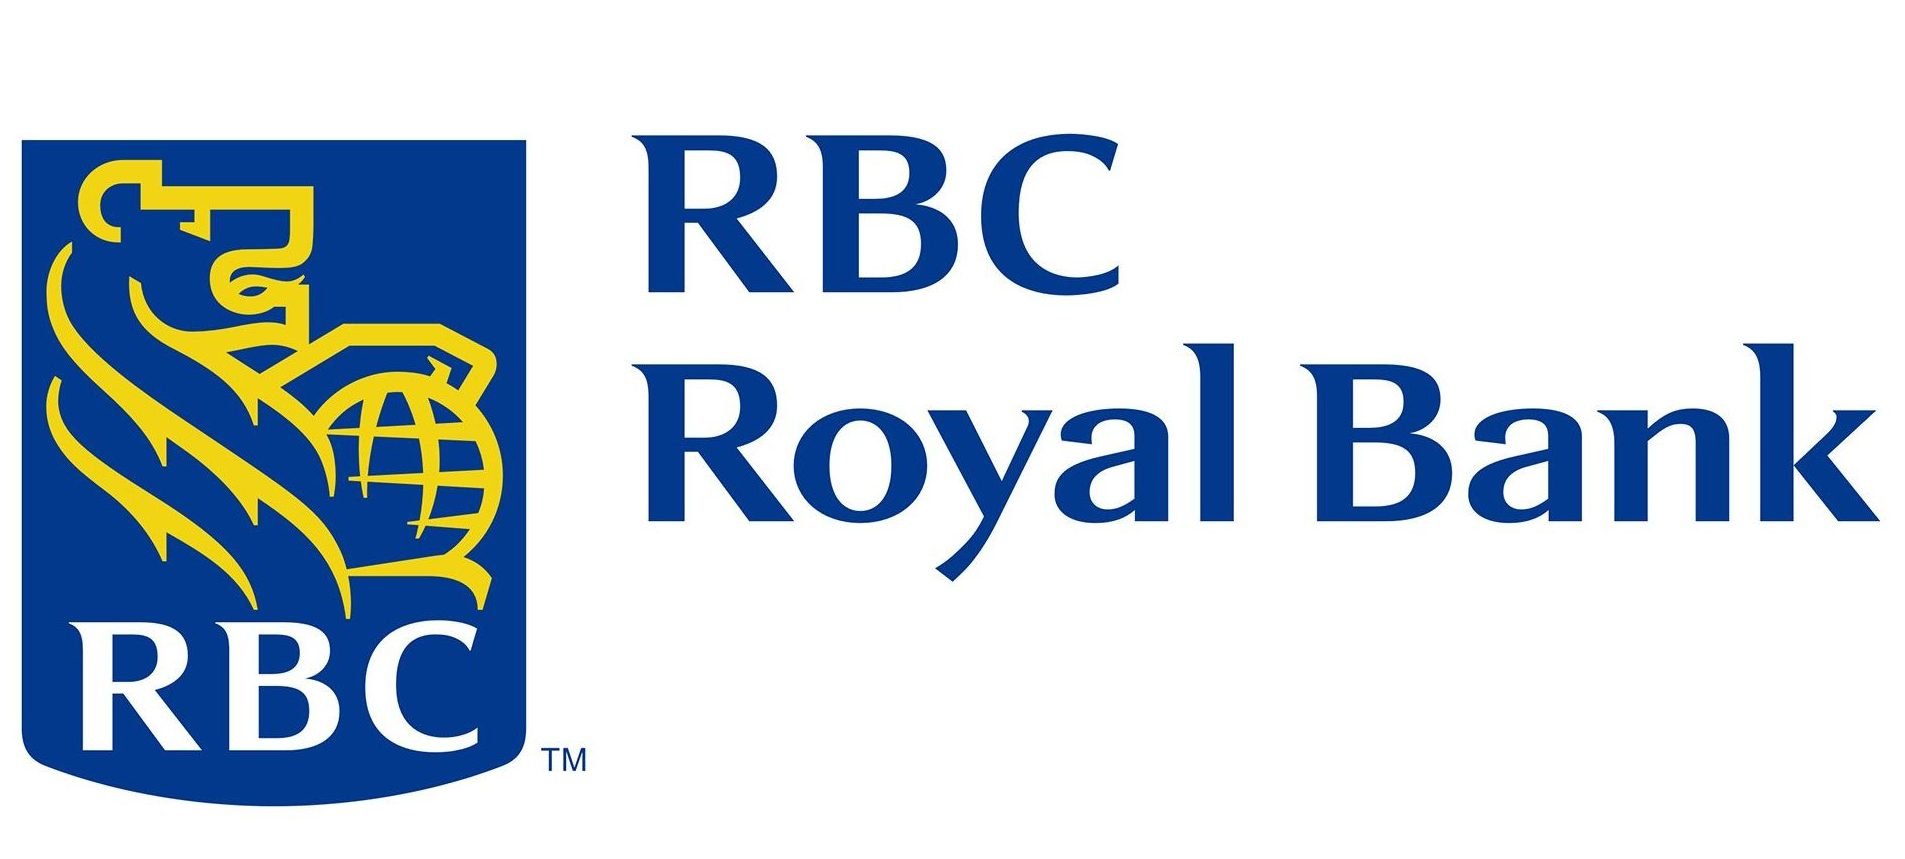 rbc-royal-bank-logo